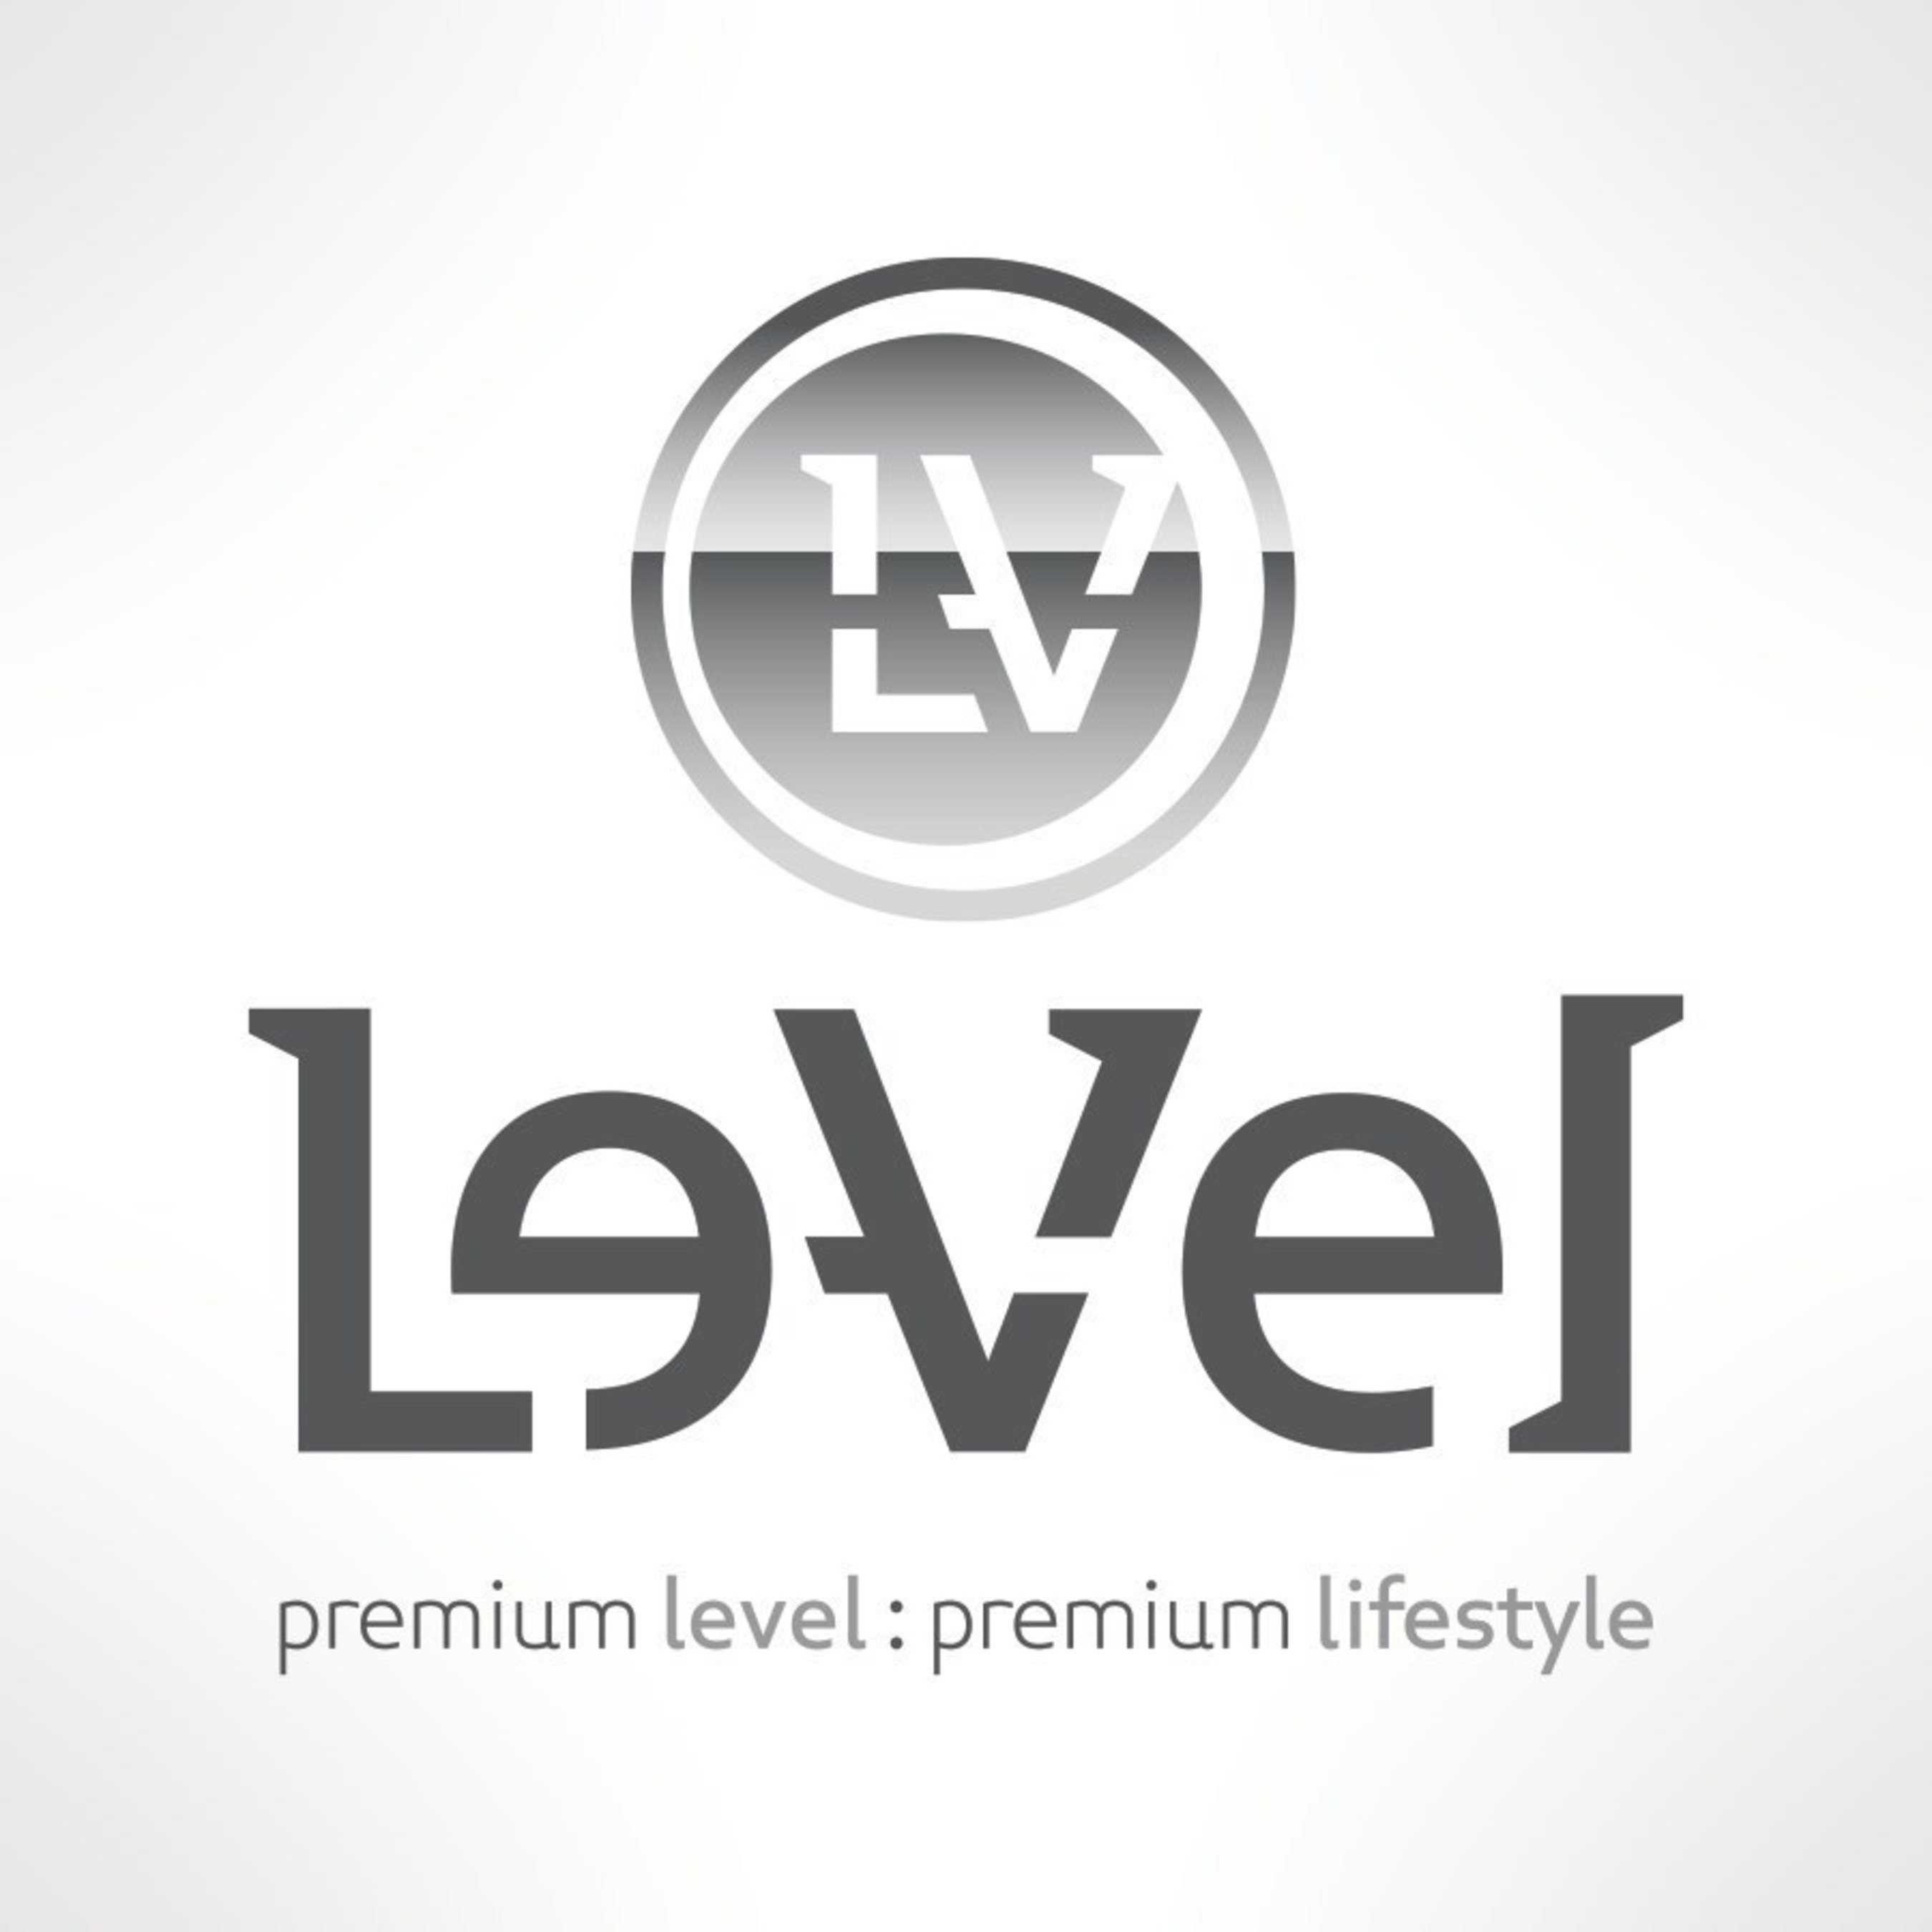 Le-Vel : premium level : premium lifestyle (PRNewsFoto/Le-Vel Brands, LLC)